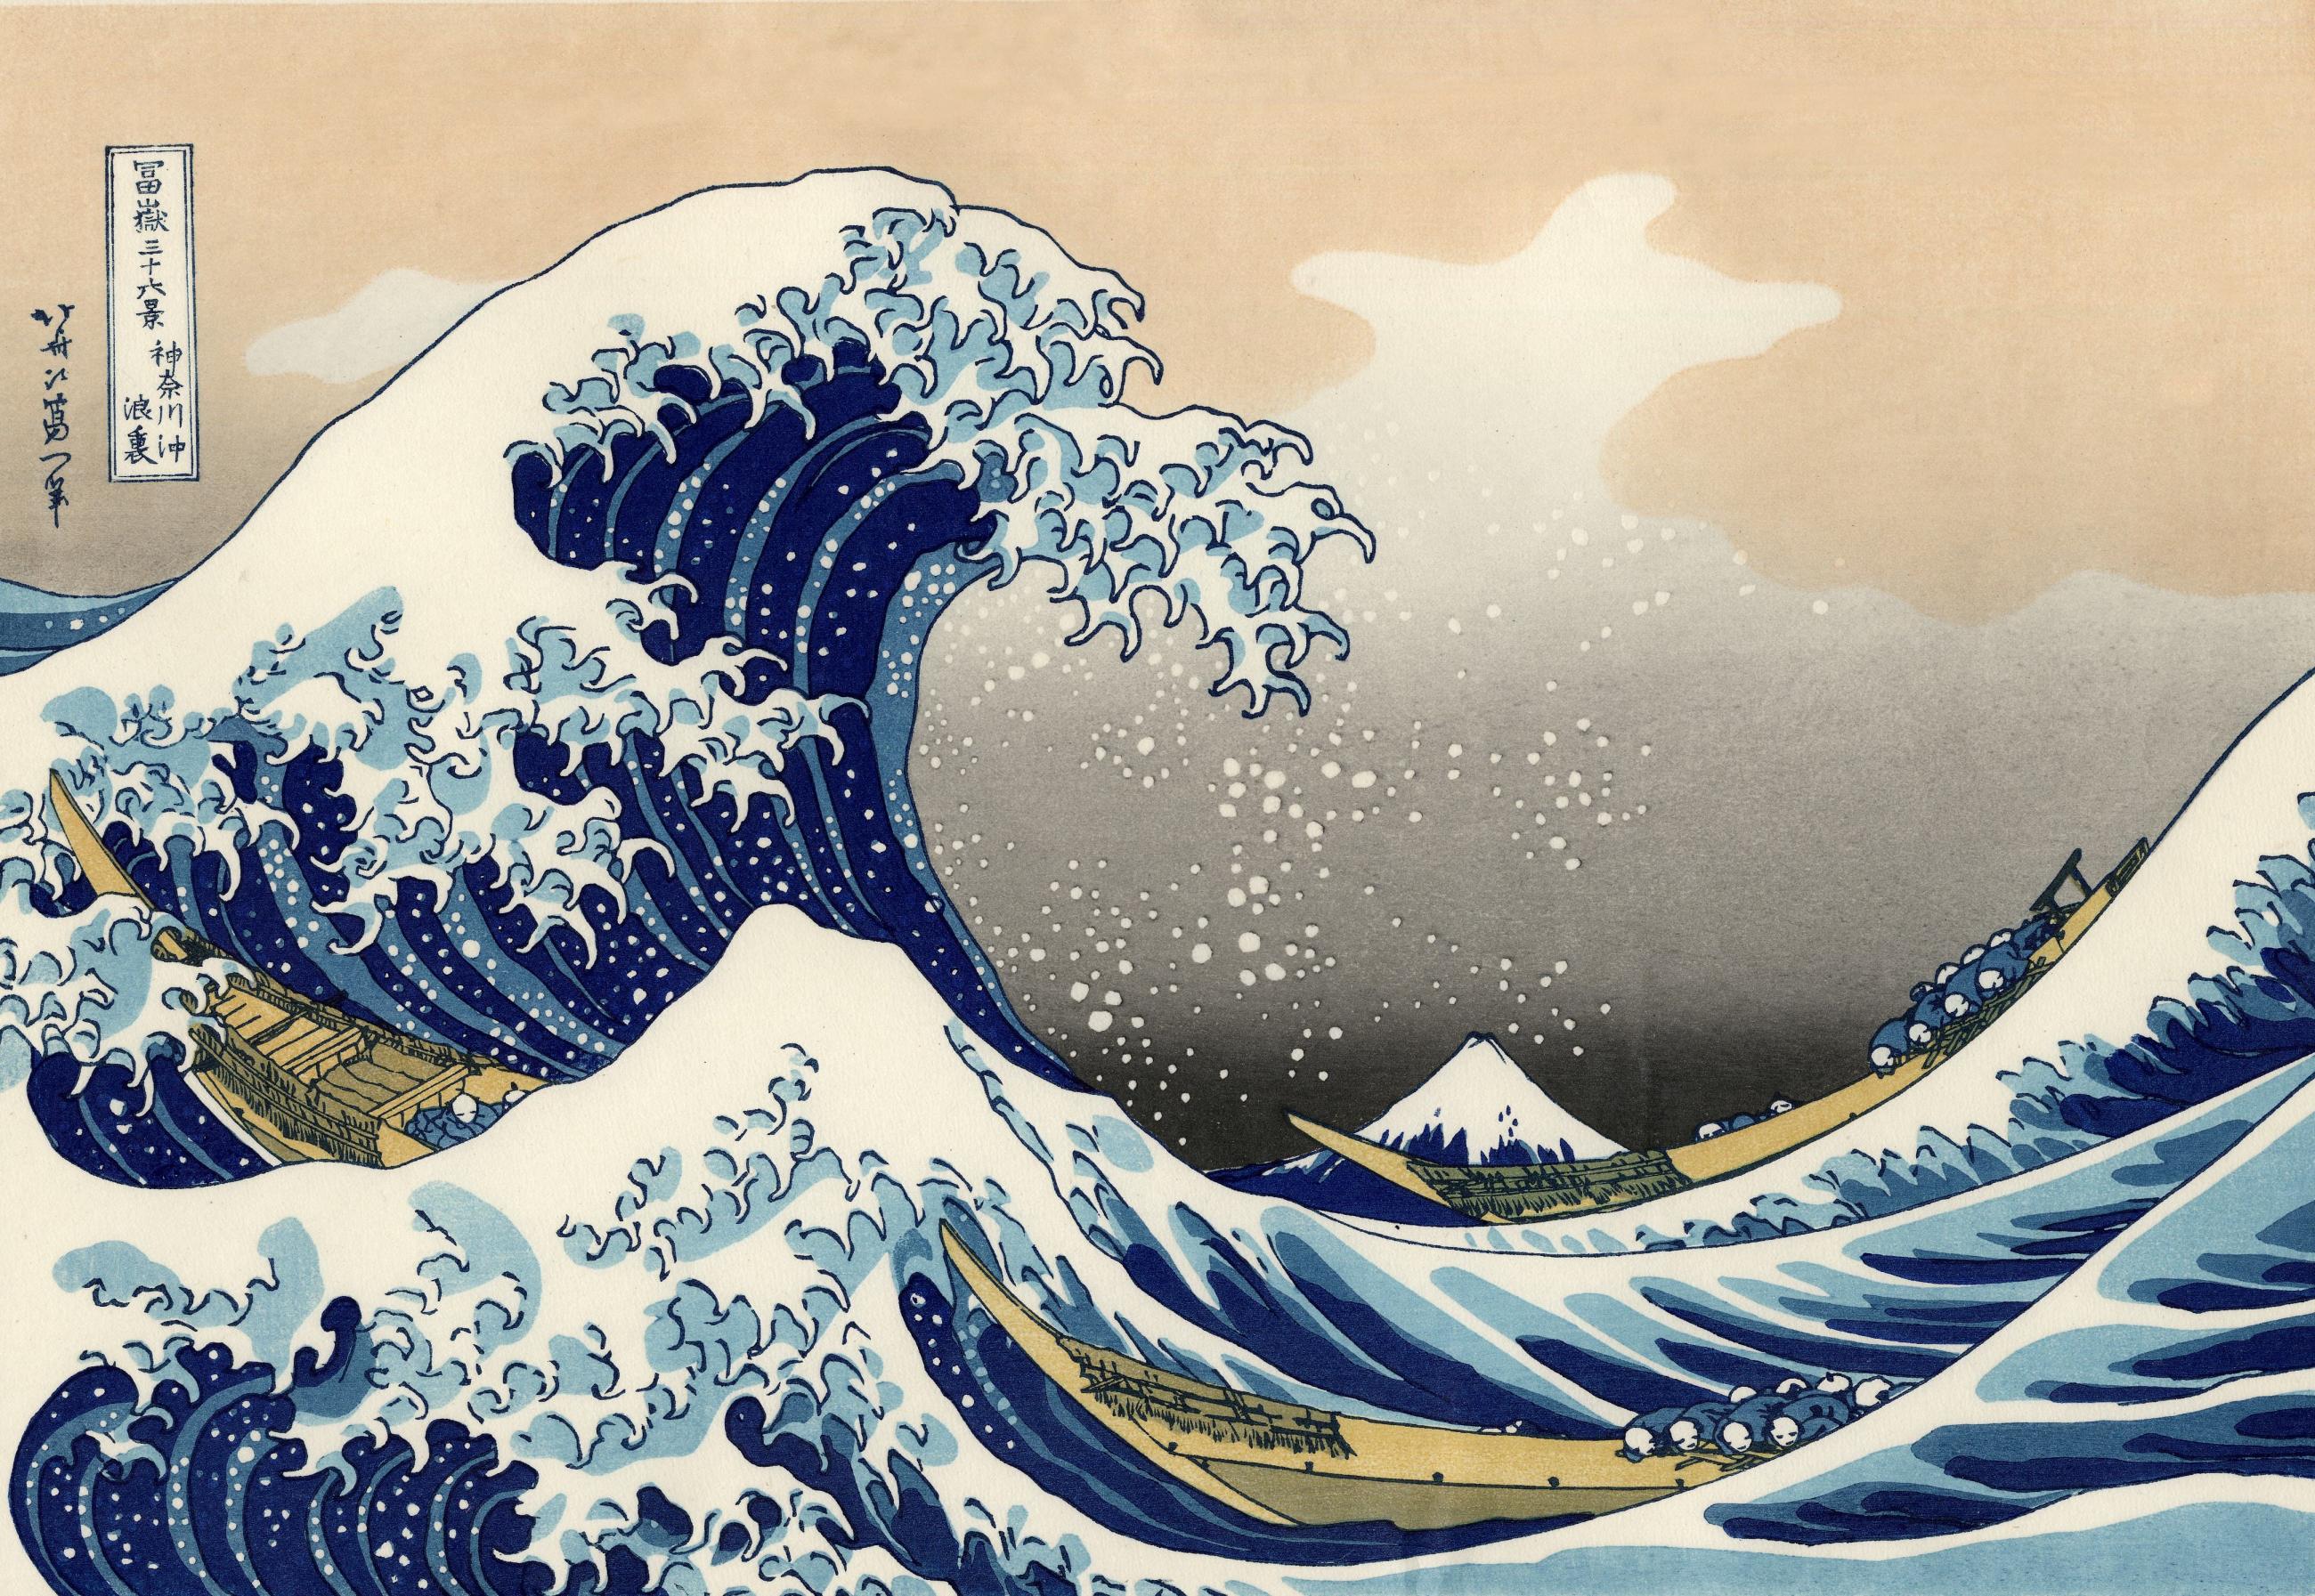 Modern recut copy of The Great Wave off Kanagawa